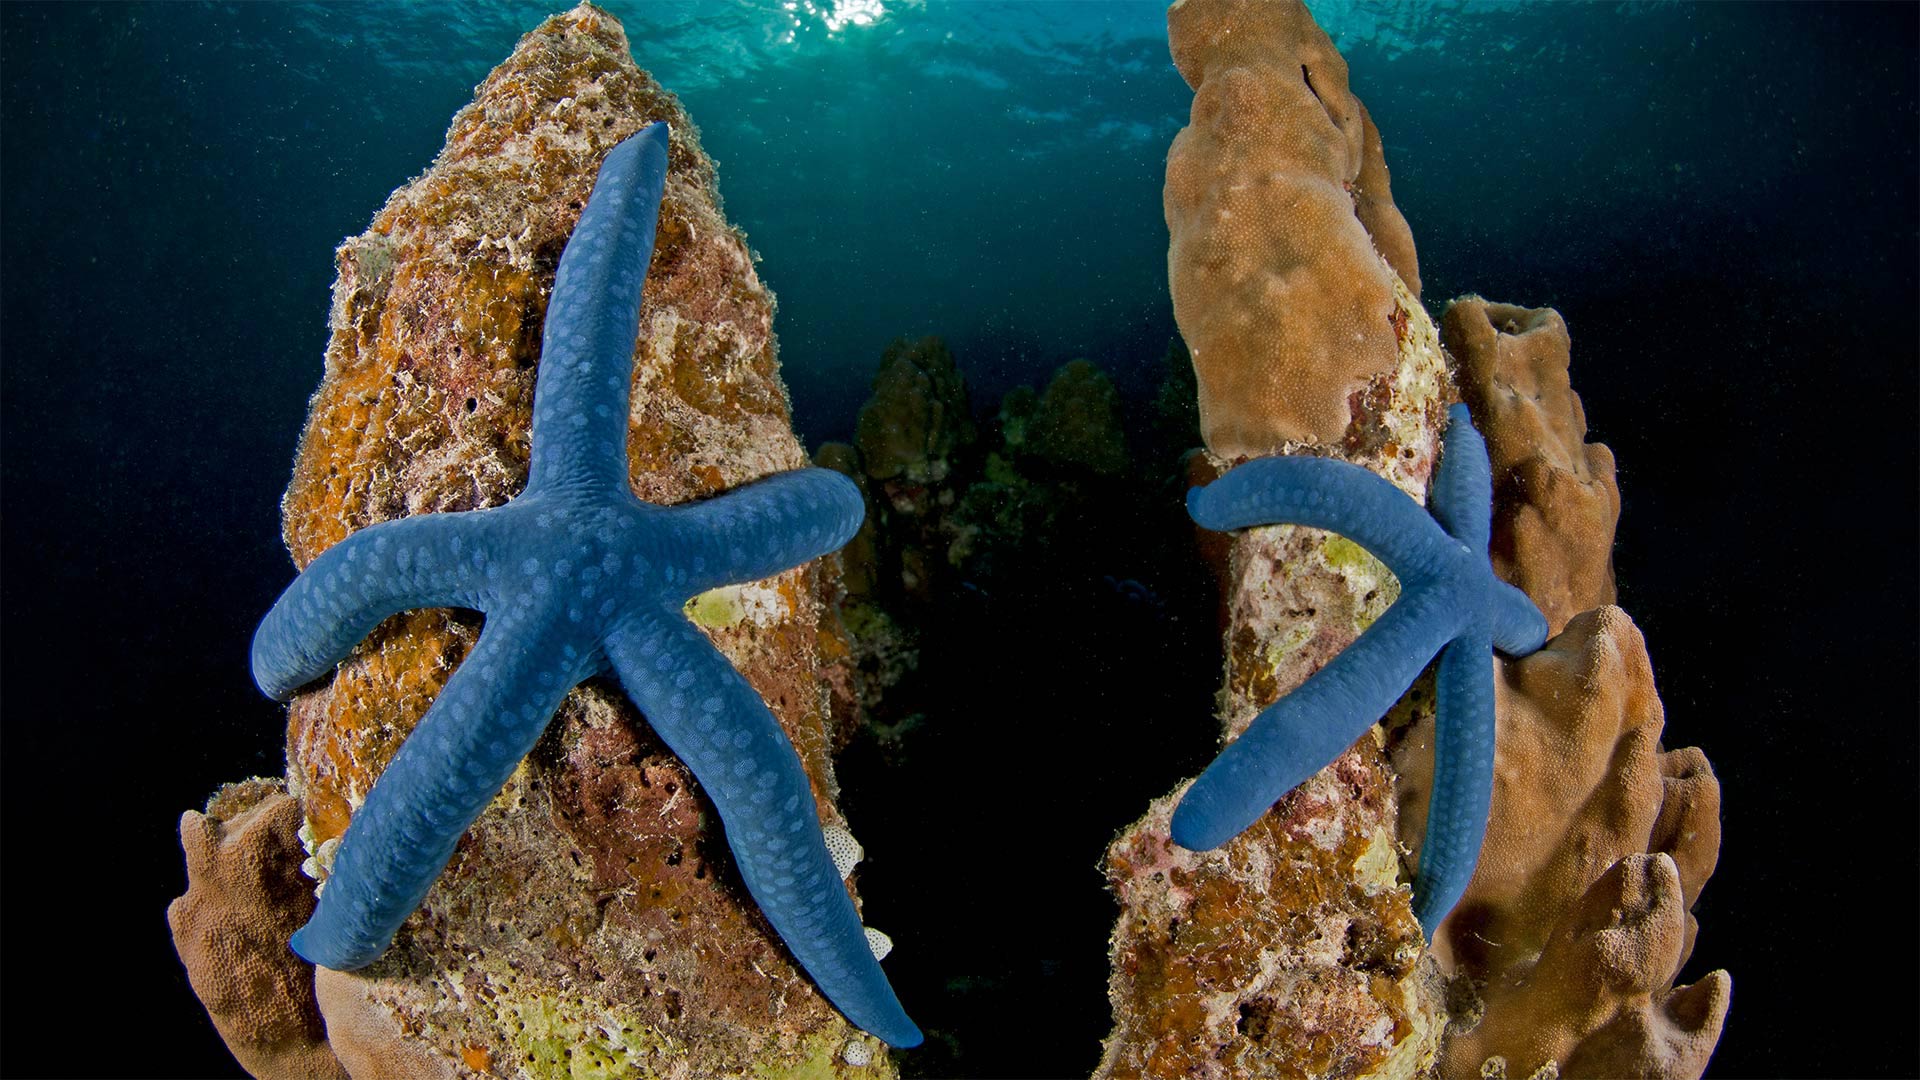 Blue linckia sea stars off New Ireland in Papua New Guinea - Jurgen Freund